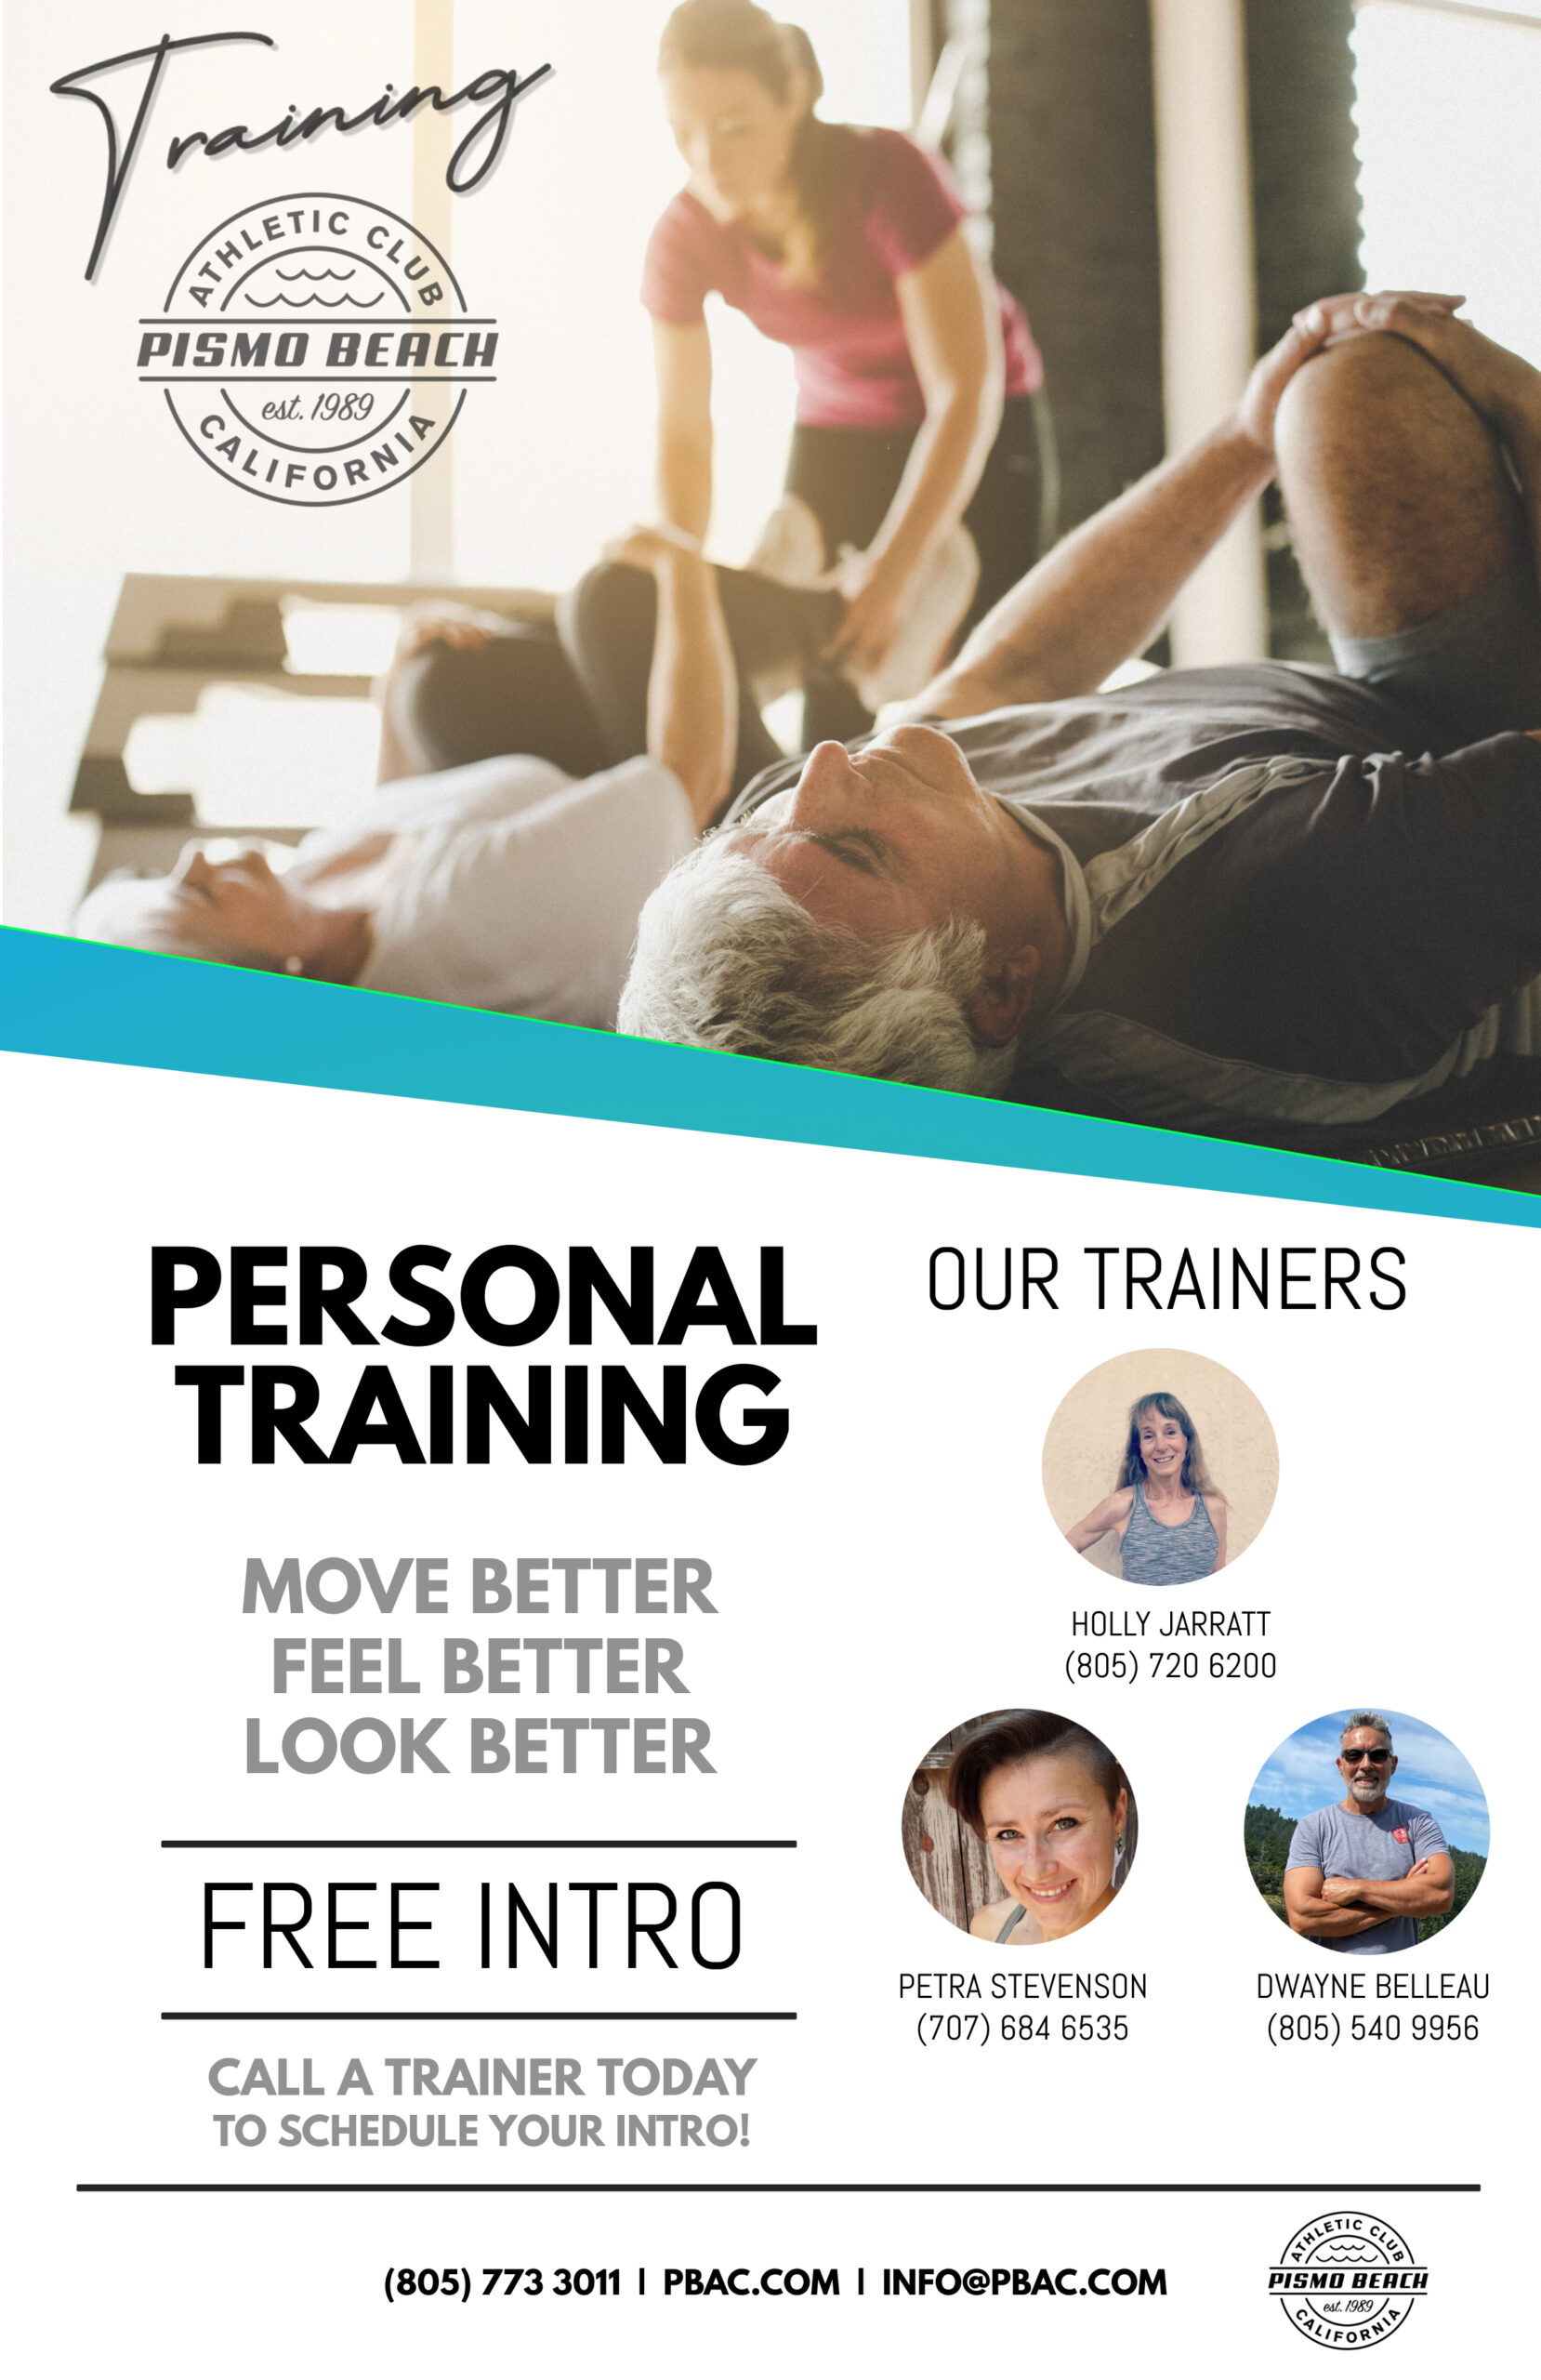 Personal Training - Pismo Beach Athletic Club